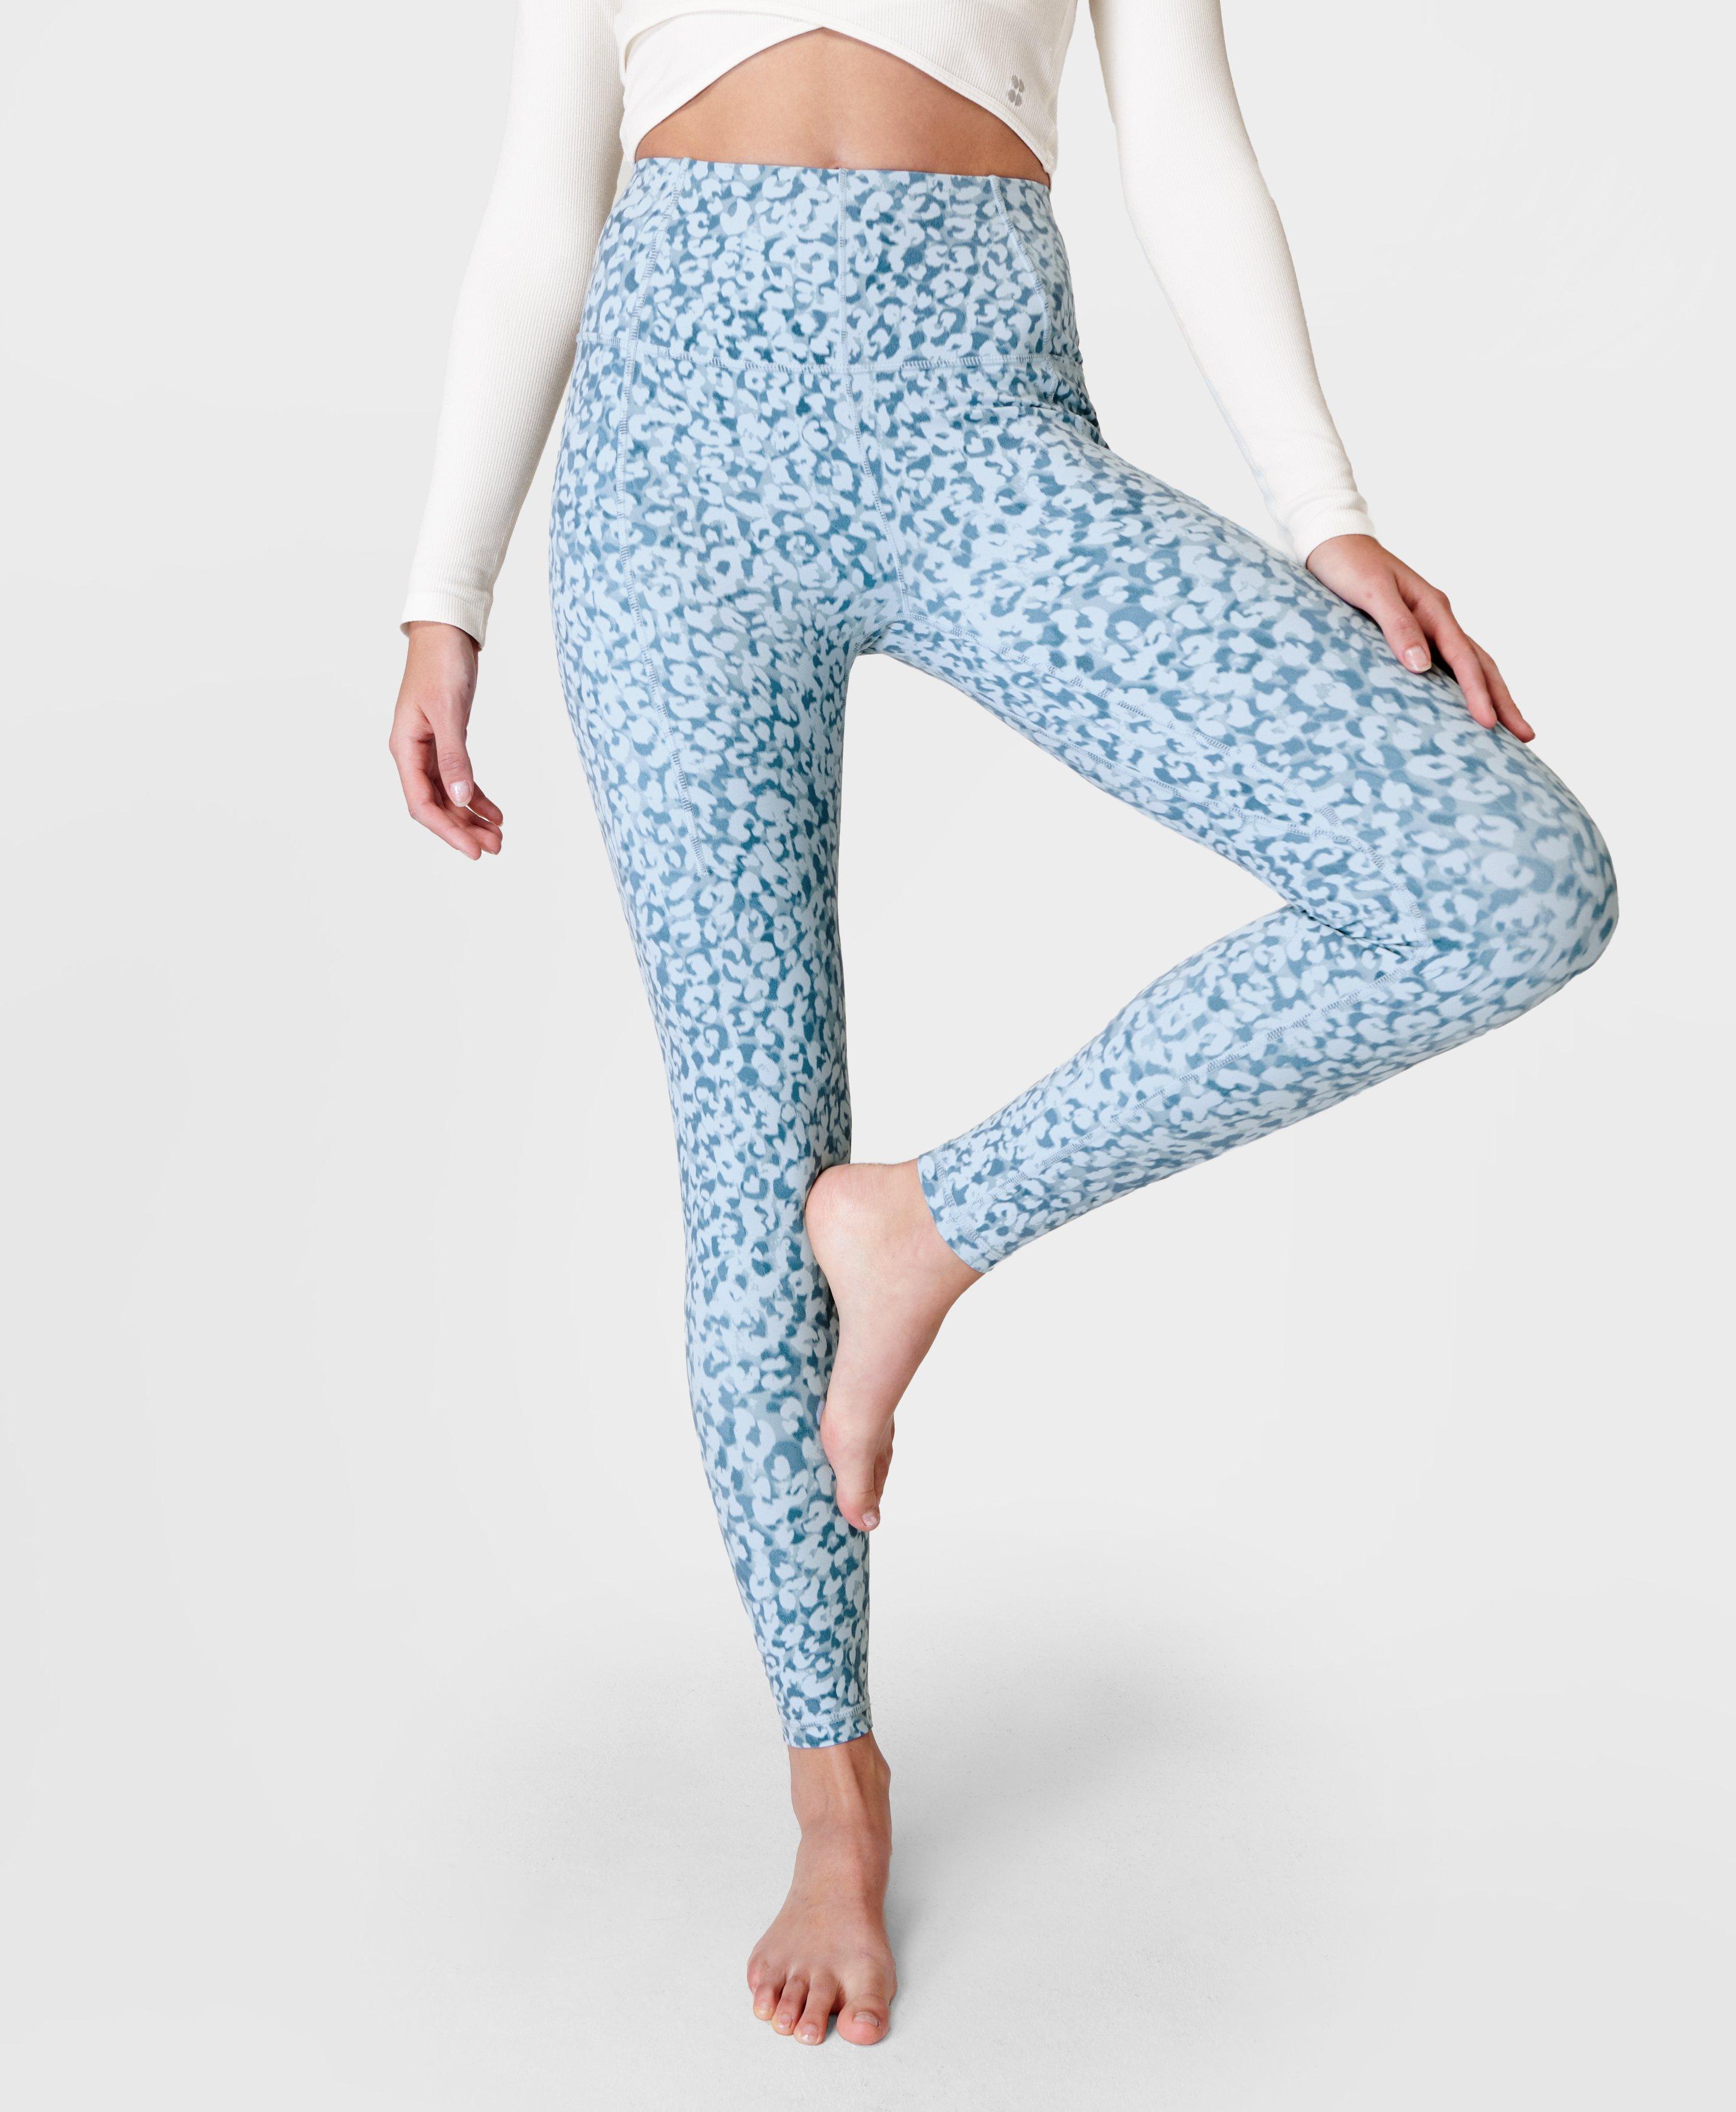 Super Soft Yoga Leggings - Blue Snow Leopard Print